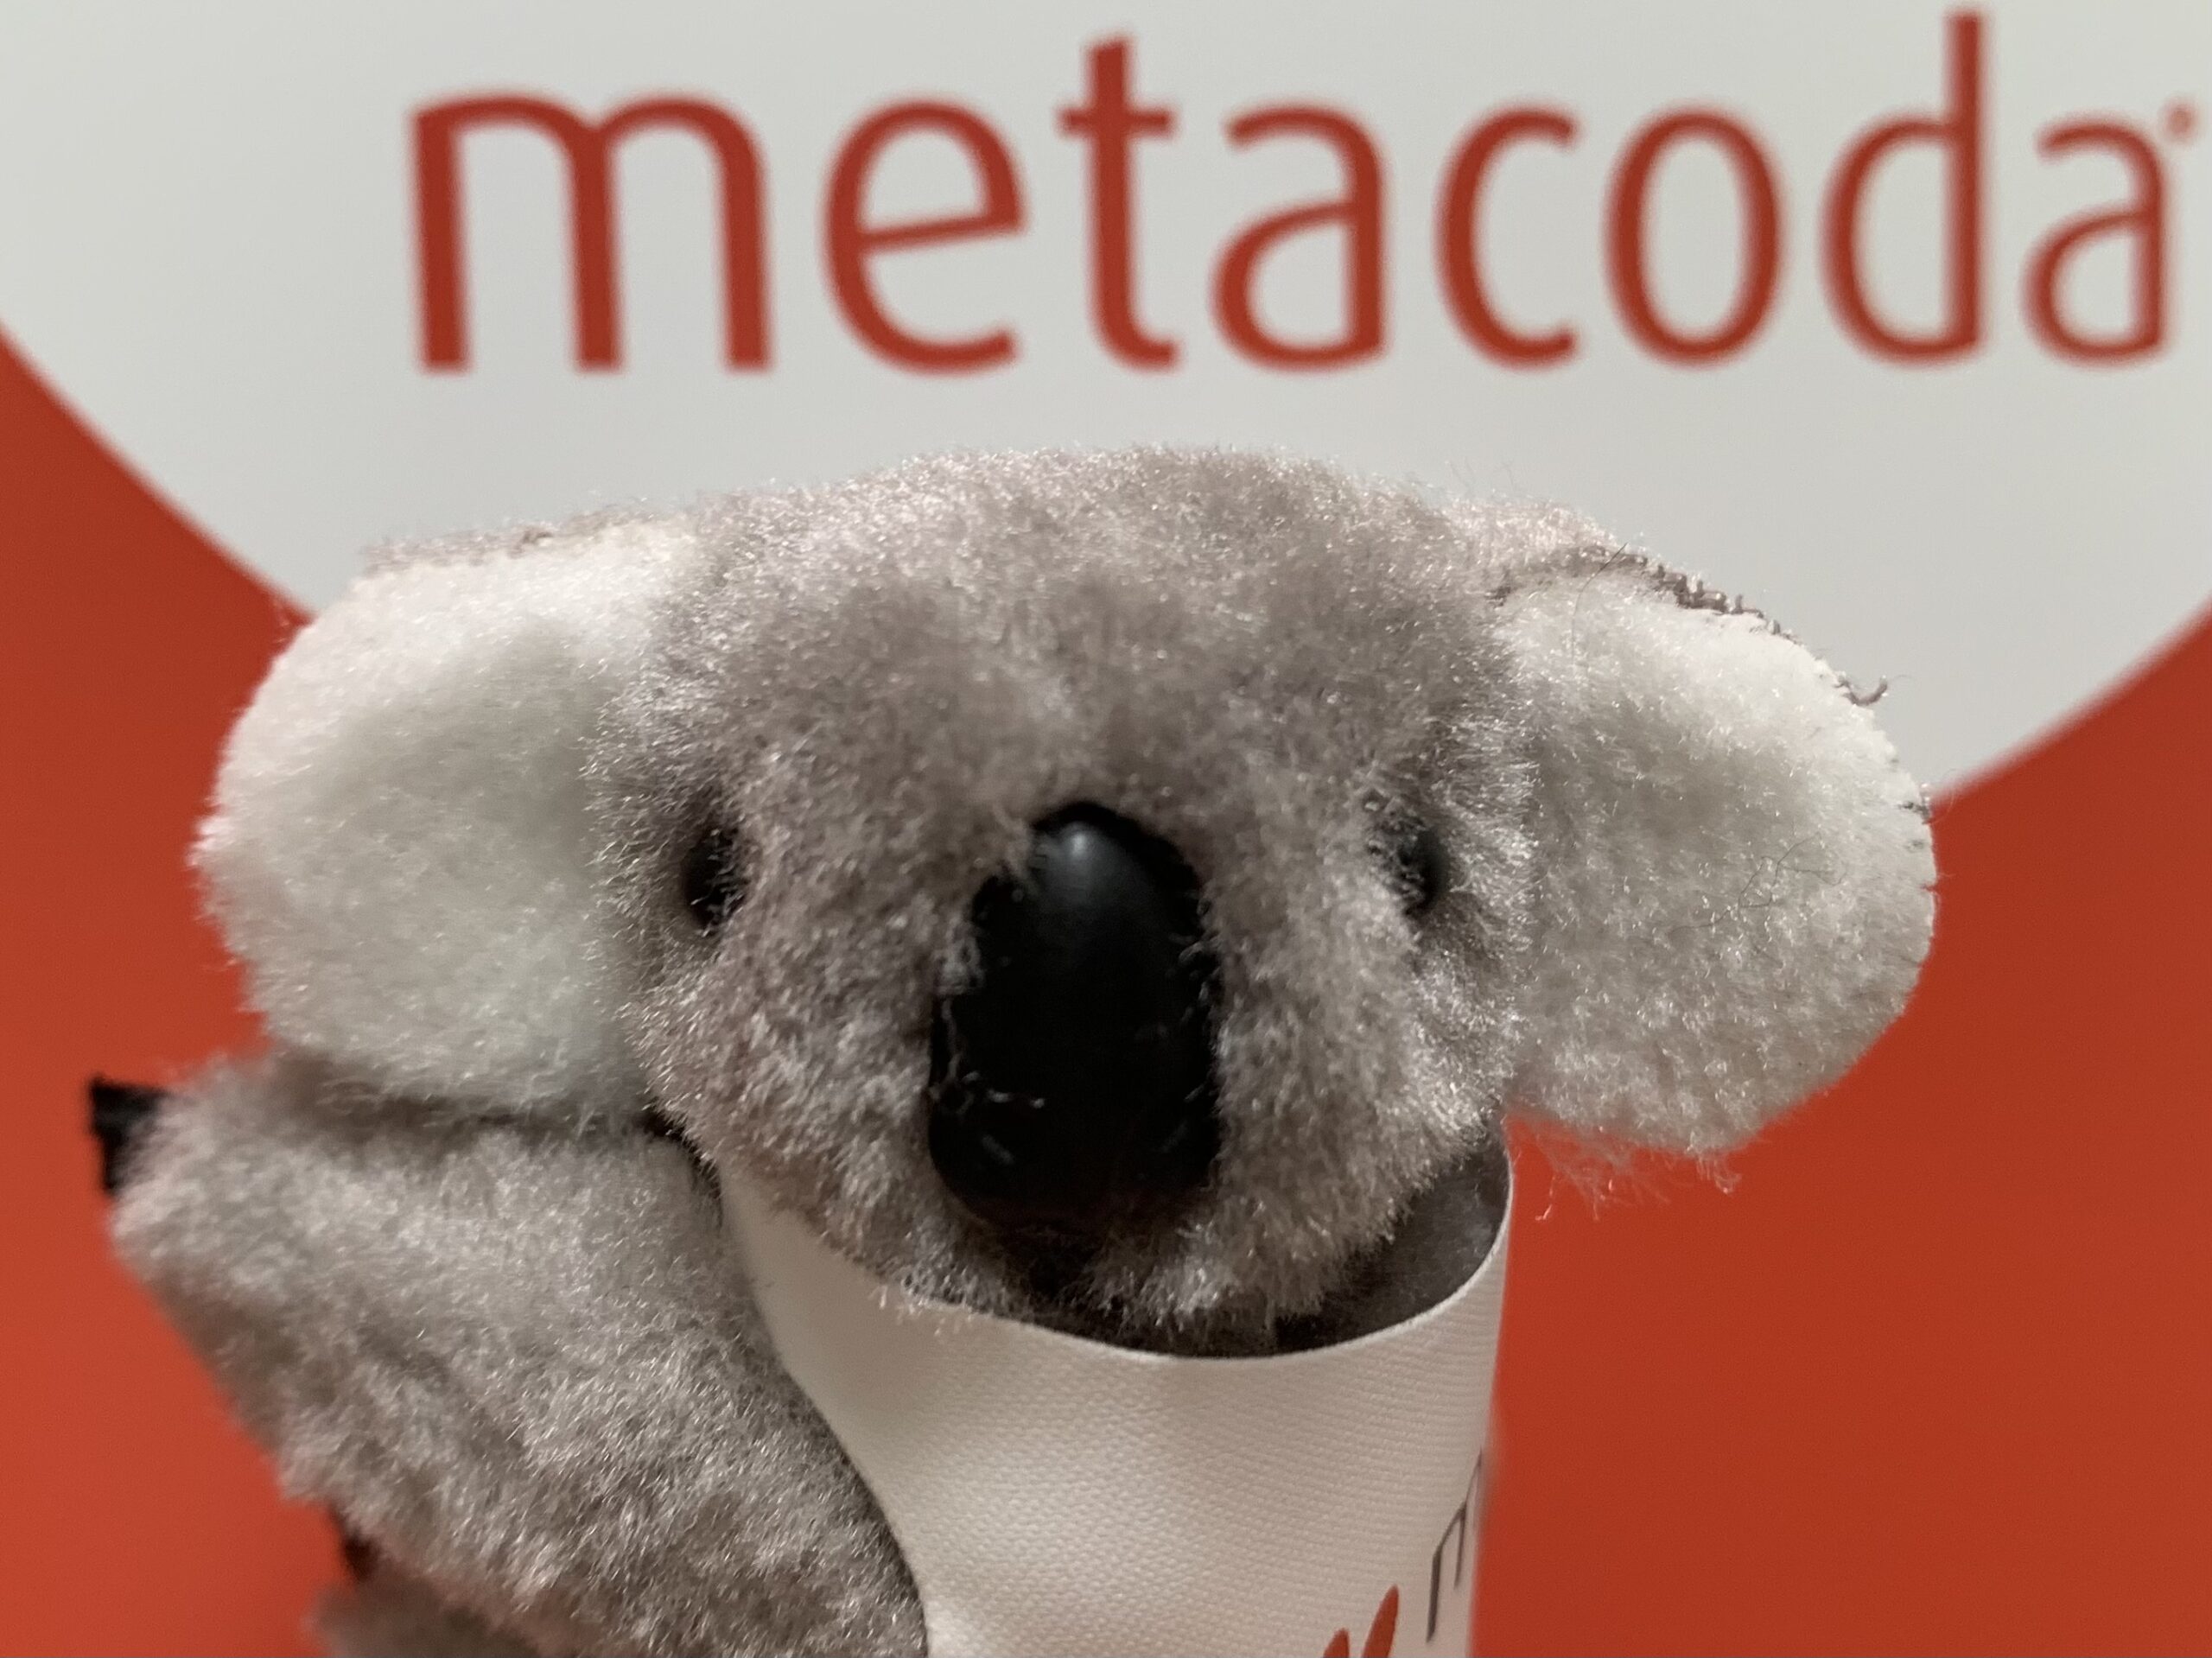 Metacoda Koala on World Emoji Day